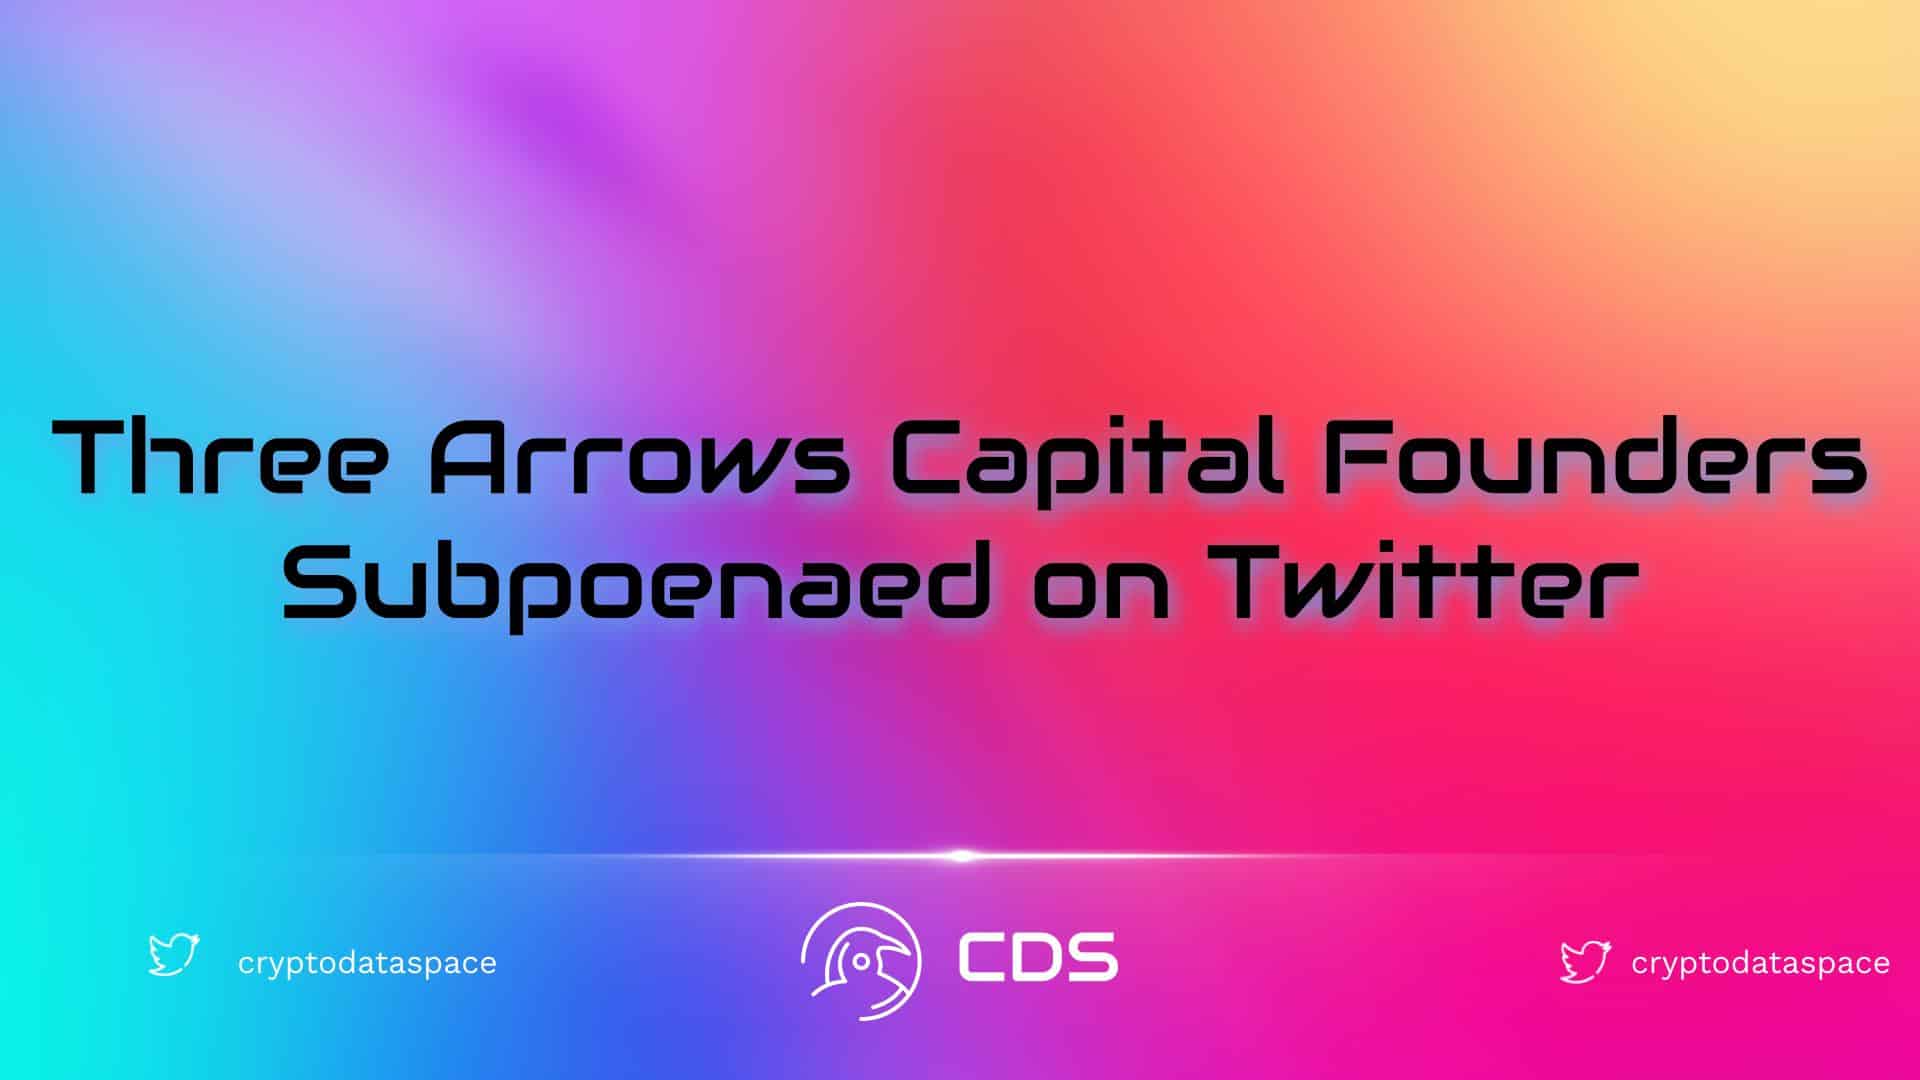 Three Arrows Capital Founders Subpoenaed on Twitter